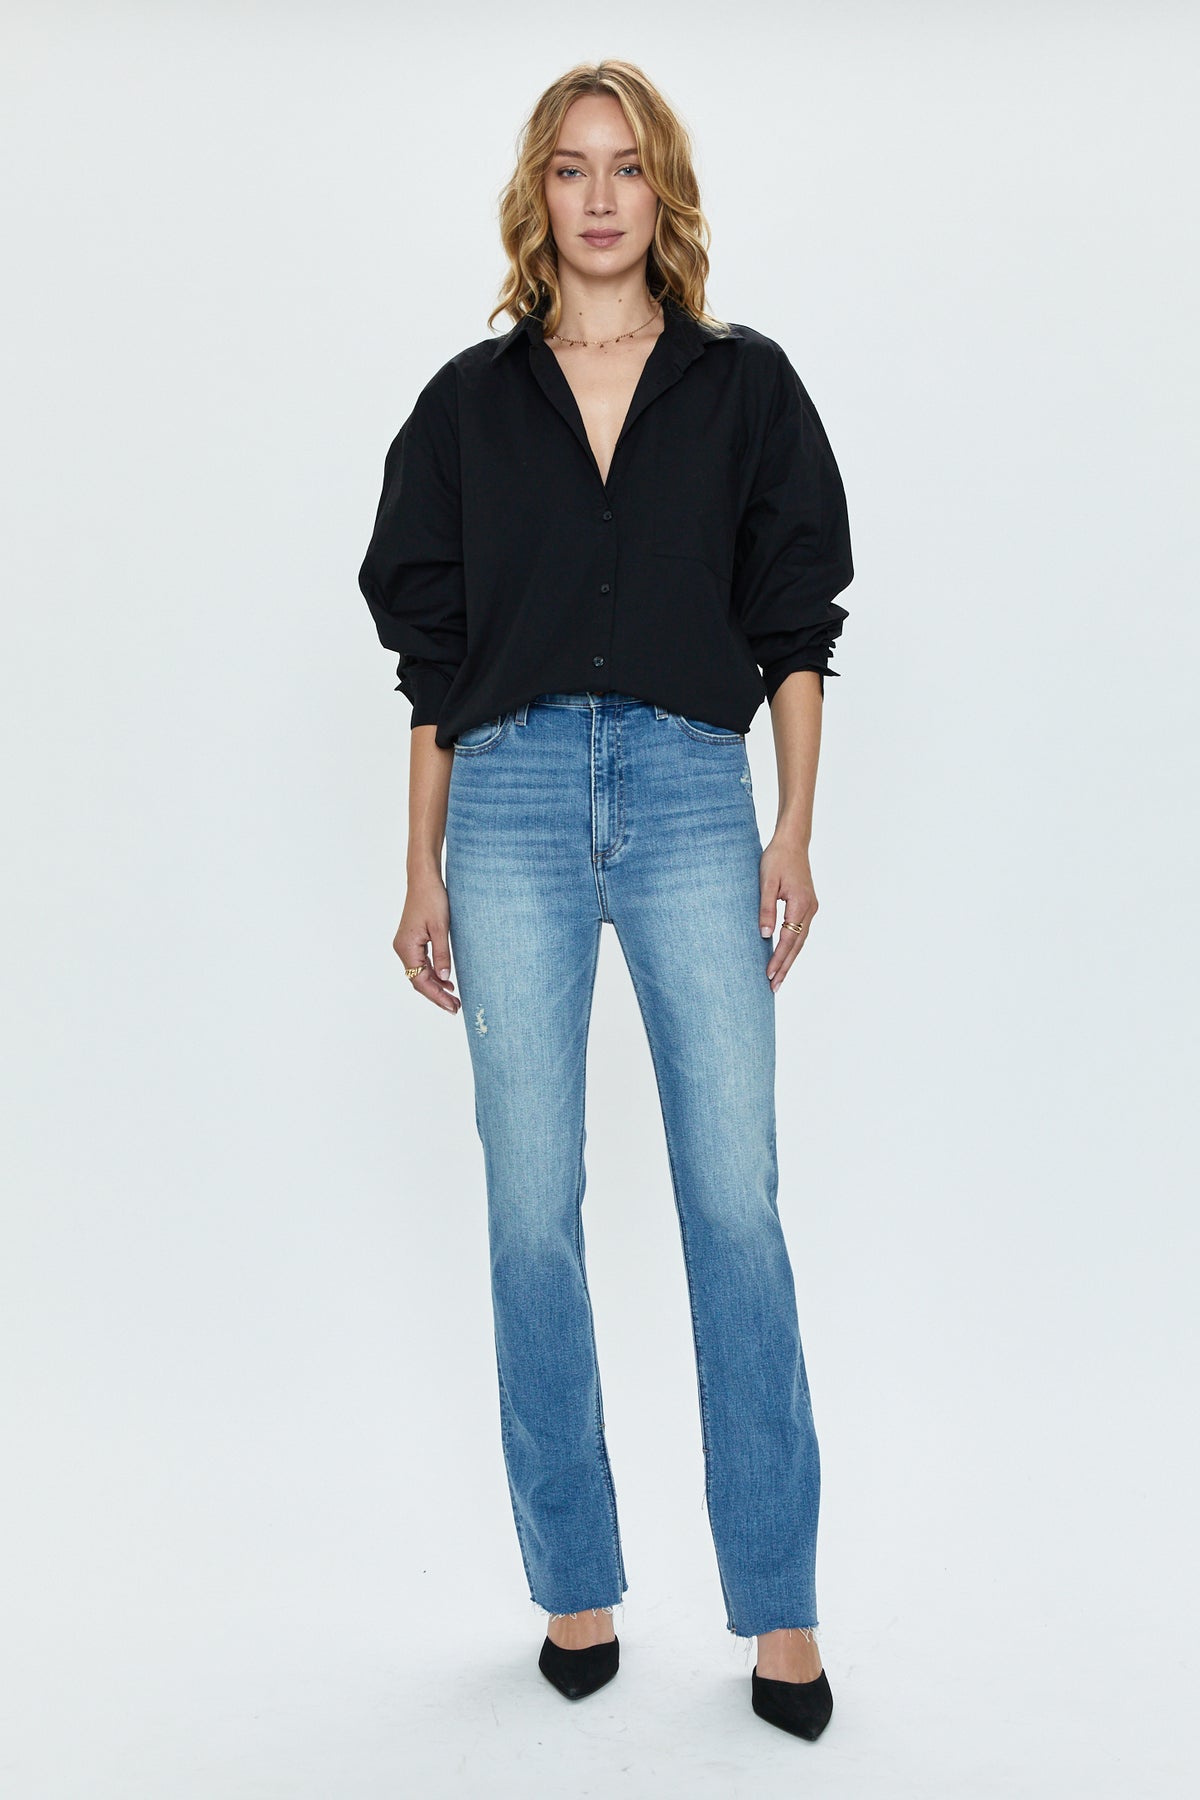 Sloane Oversized Button Down Shirt - Noir
            
              Sale